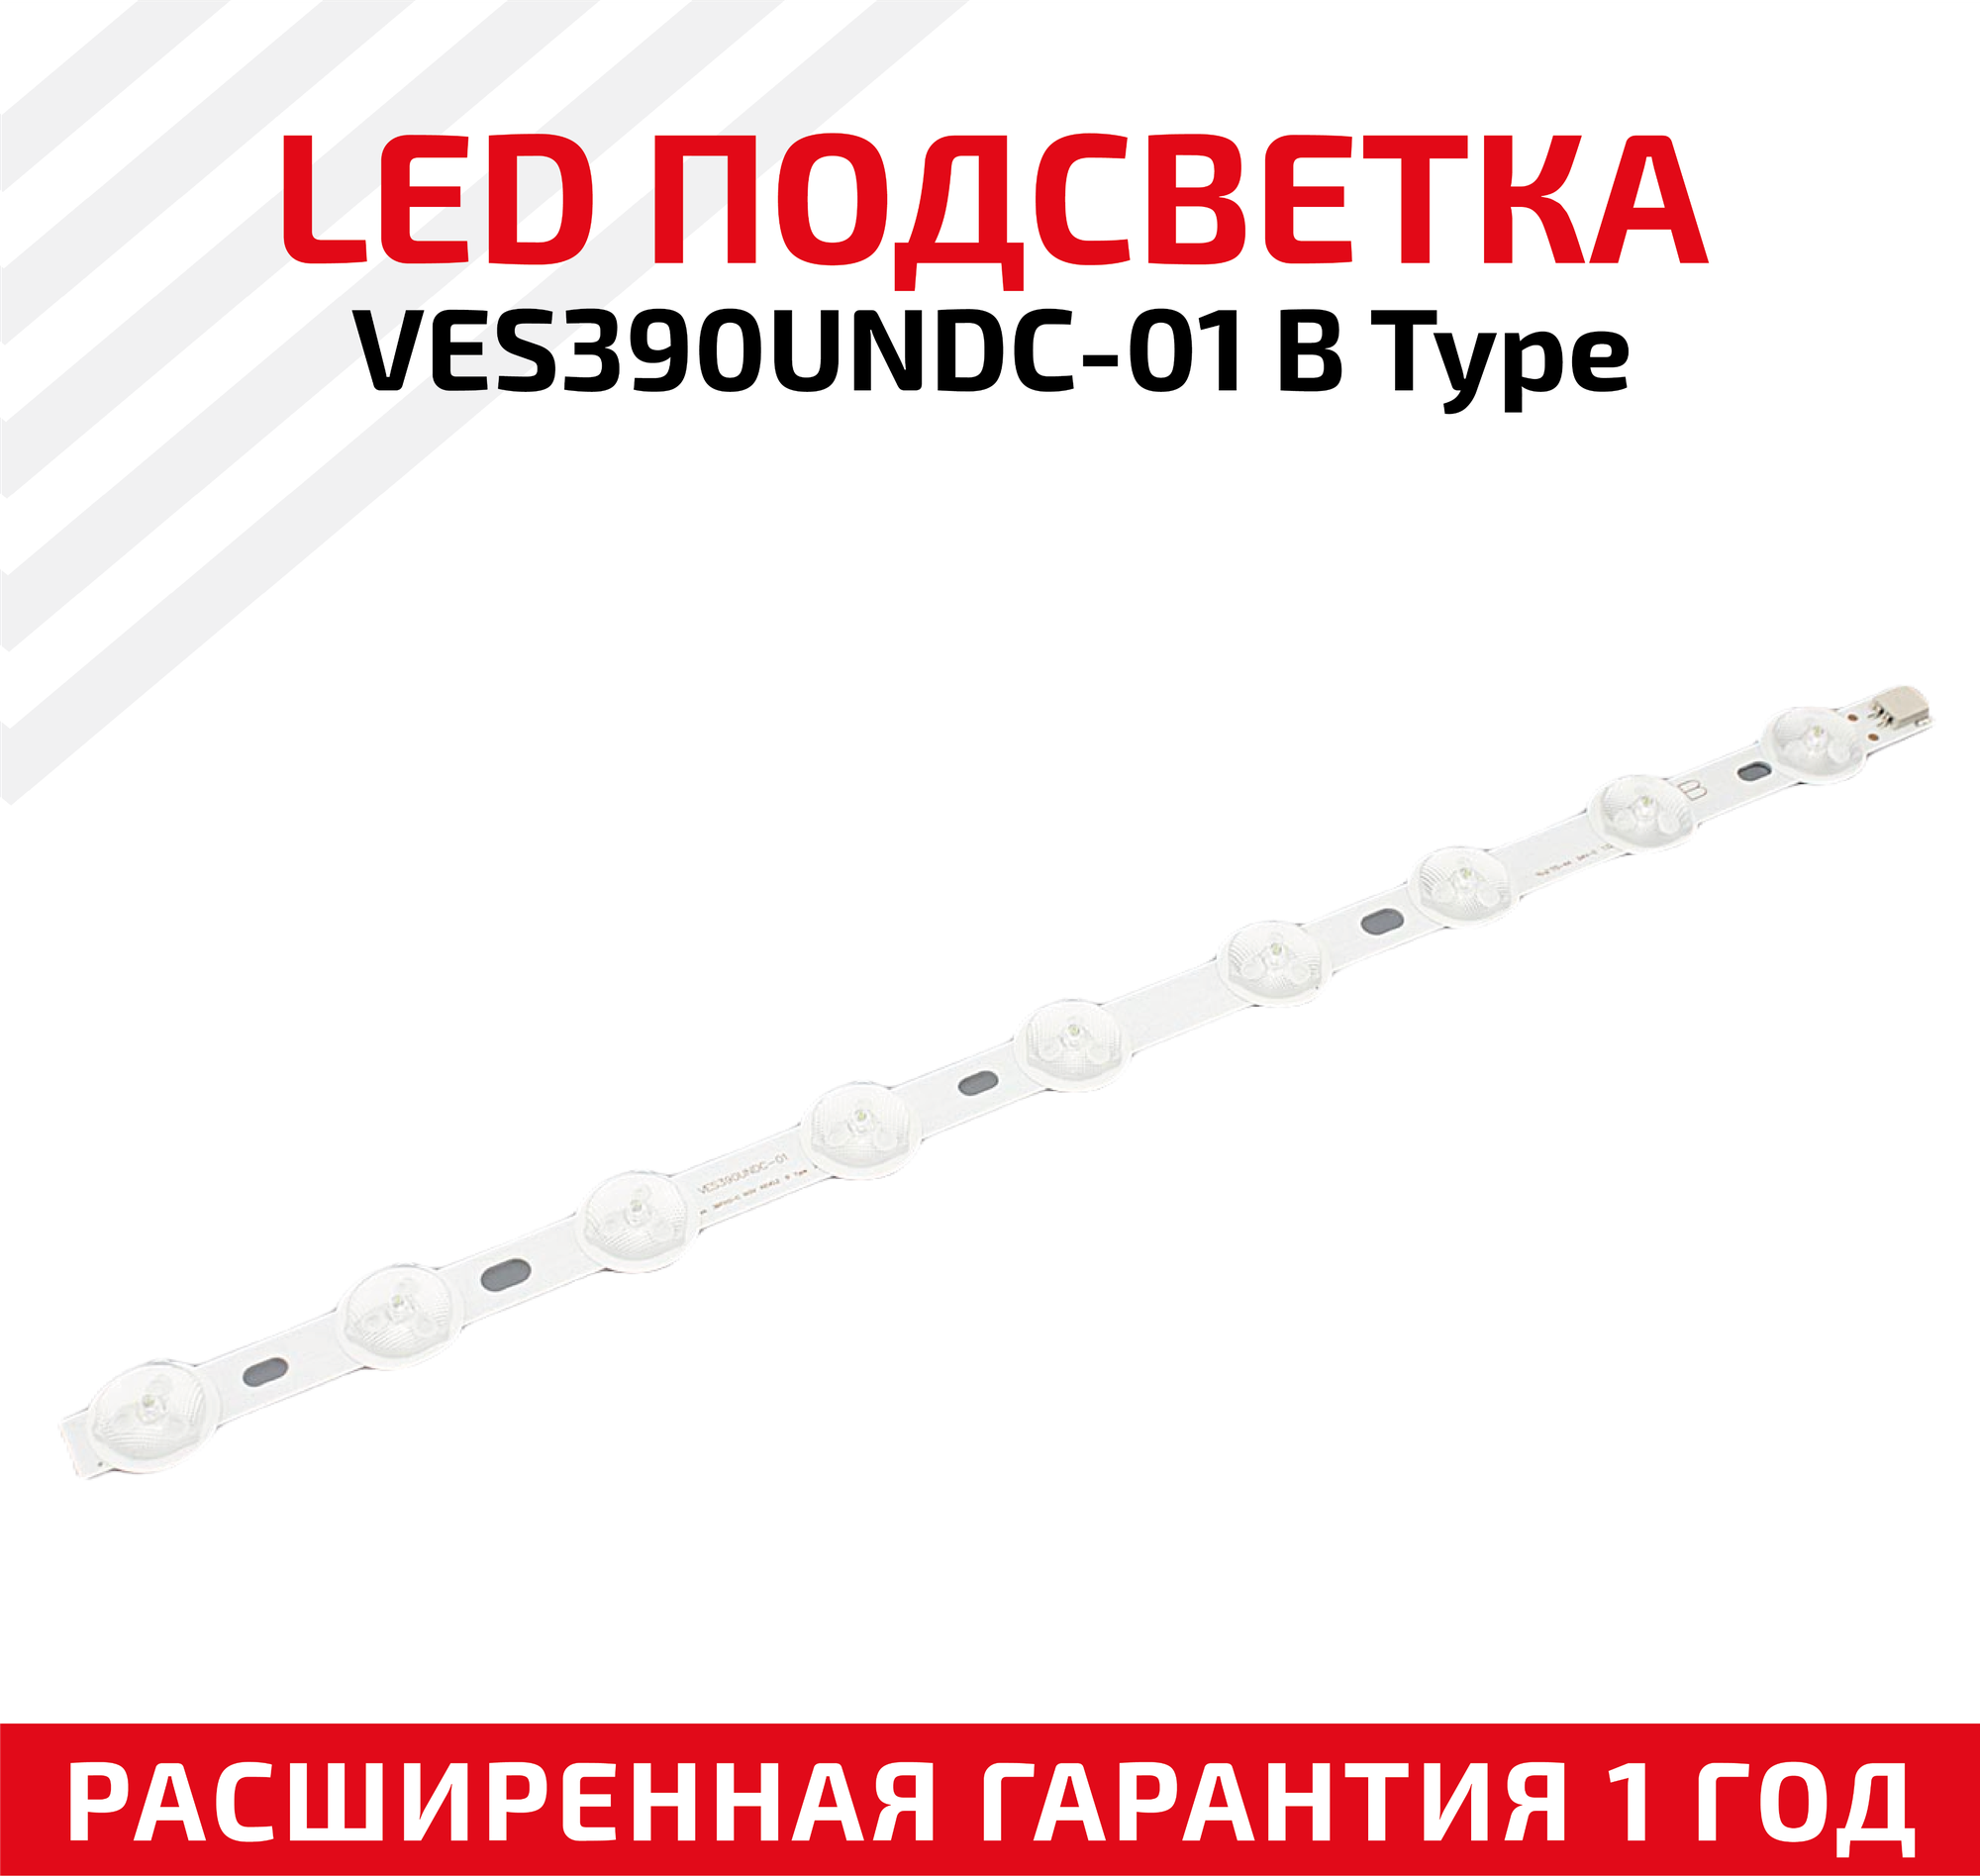 LED подсветка (светодиодная планка) для телевизора VES390UNDC-01 B Type